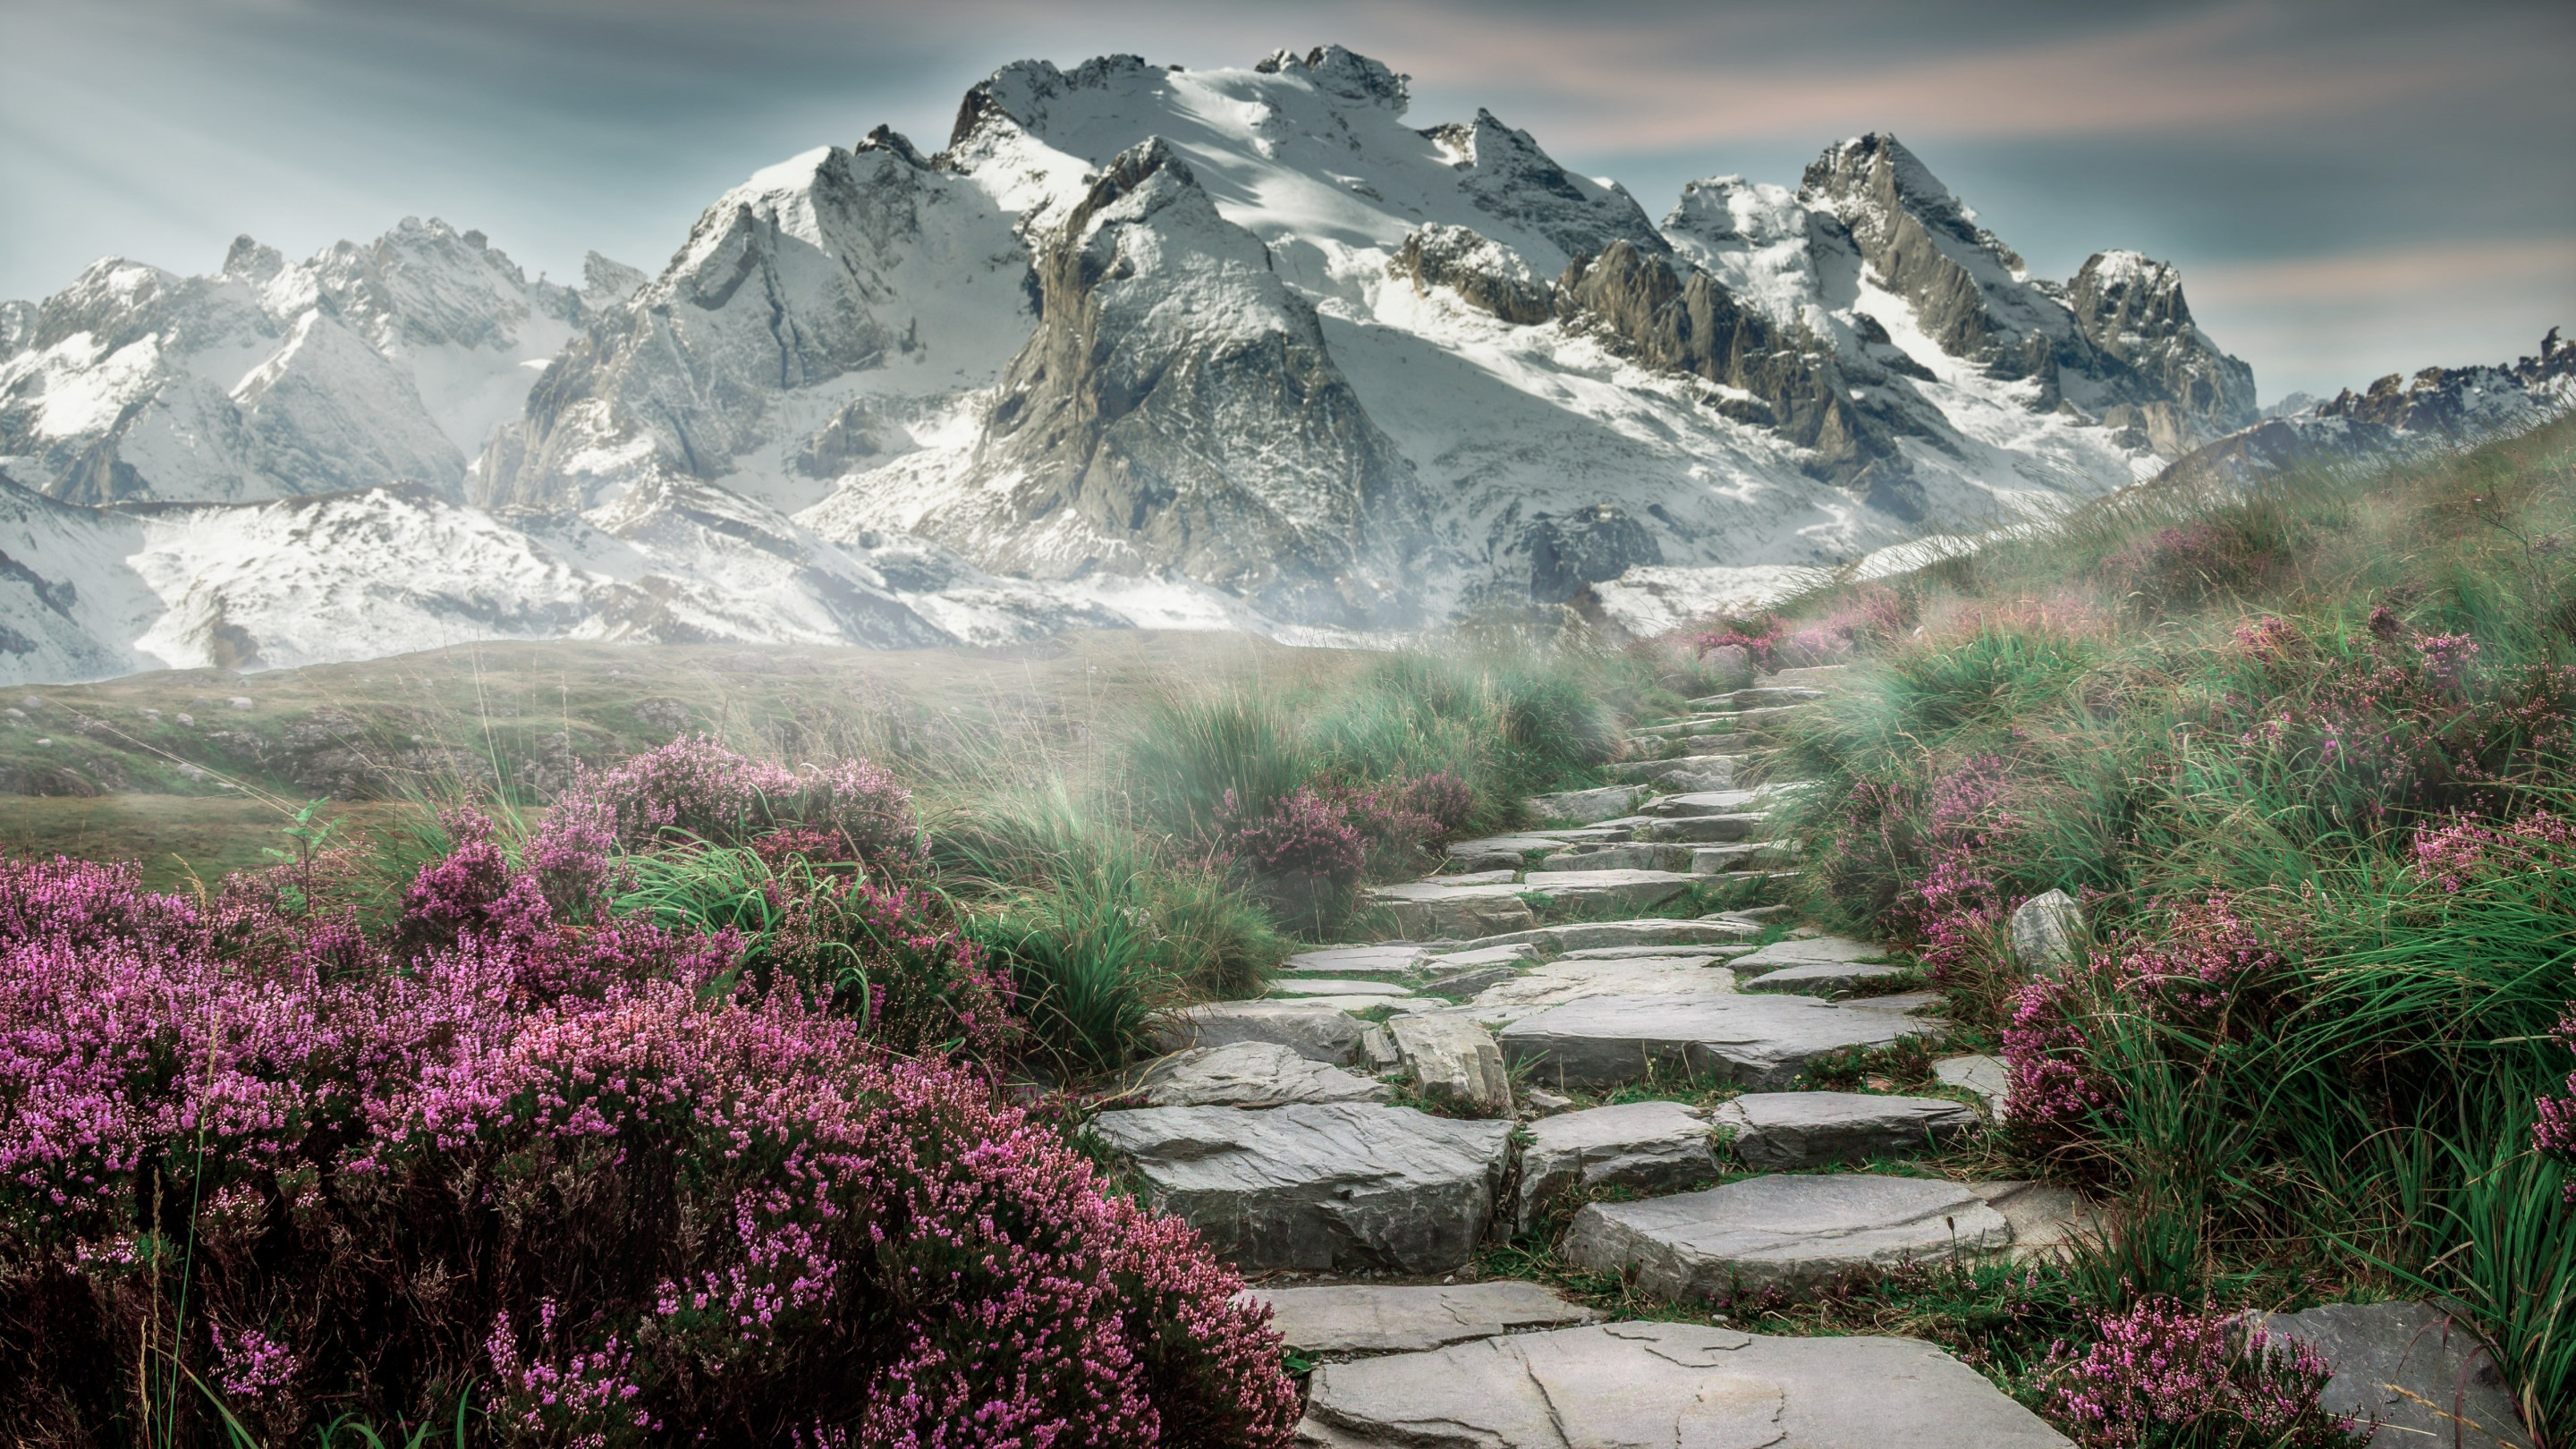 Surreal mountain landscape wallpaper 2880x1620